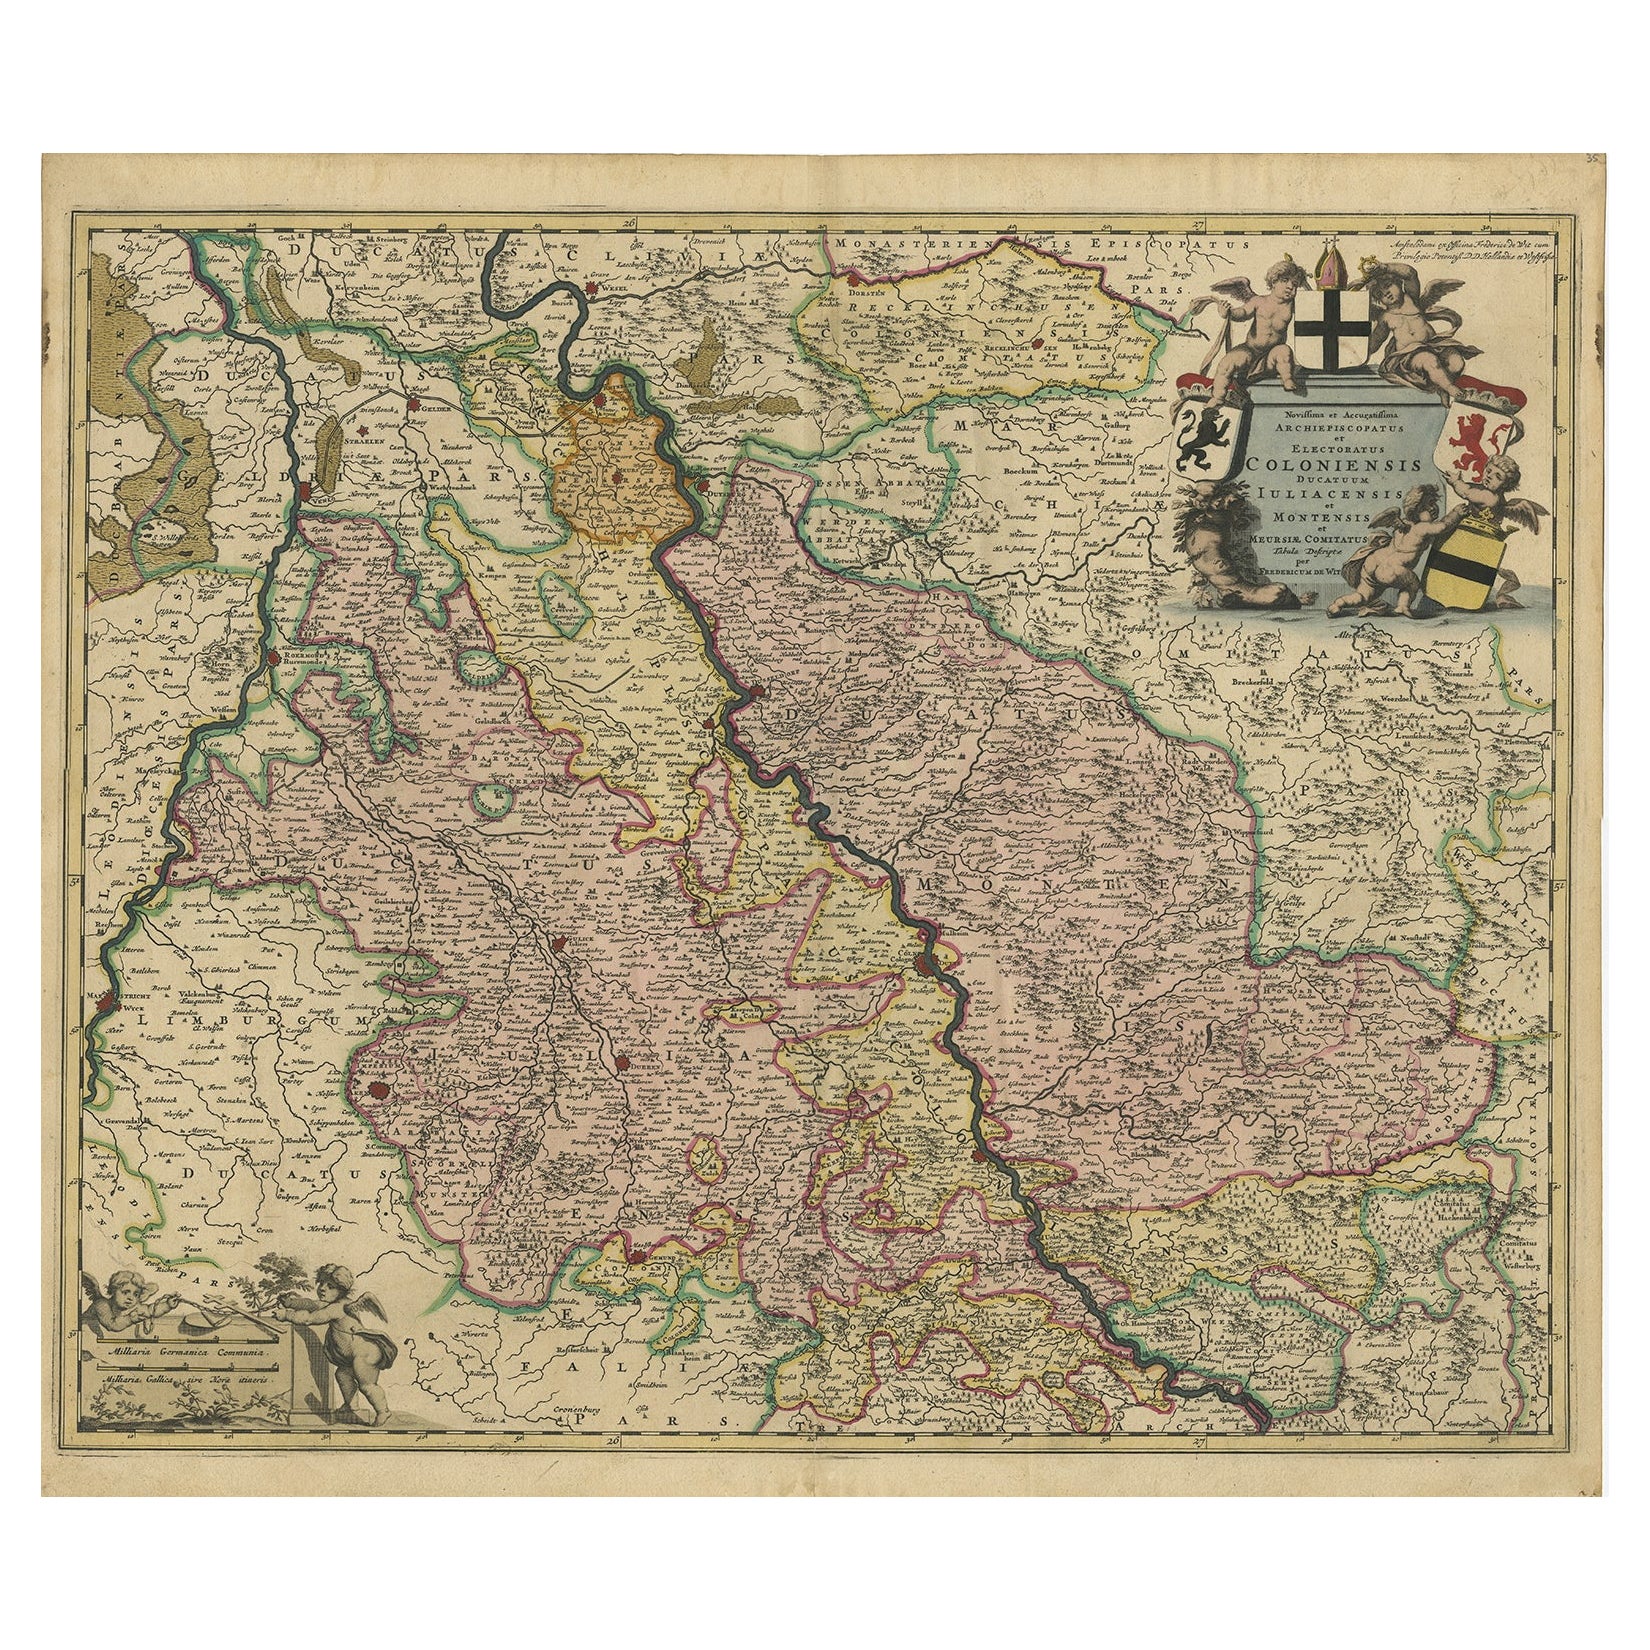 Rhine Splendor: Antique Map of the Lower Rhine Region, circa 1680